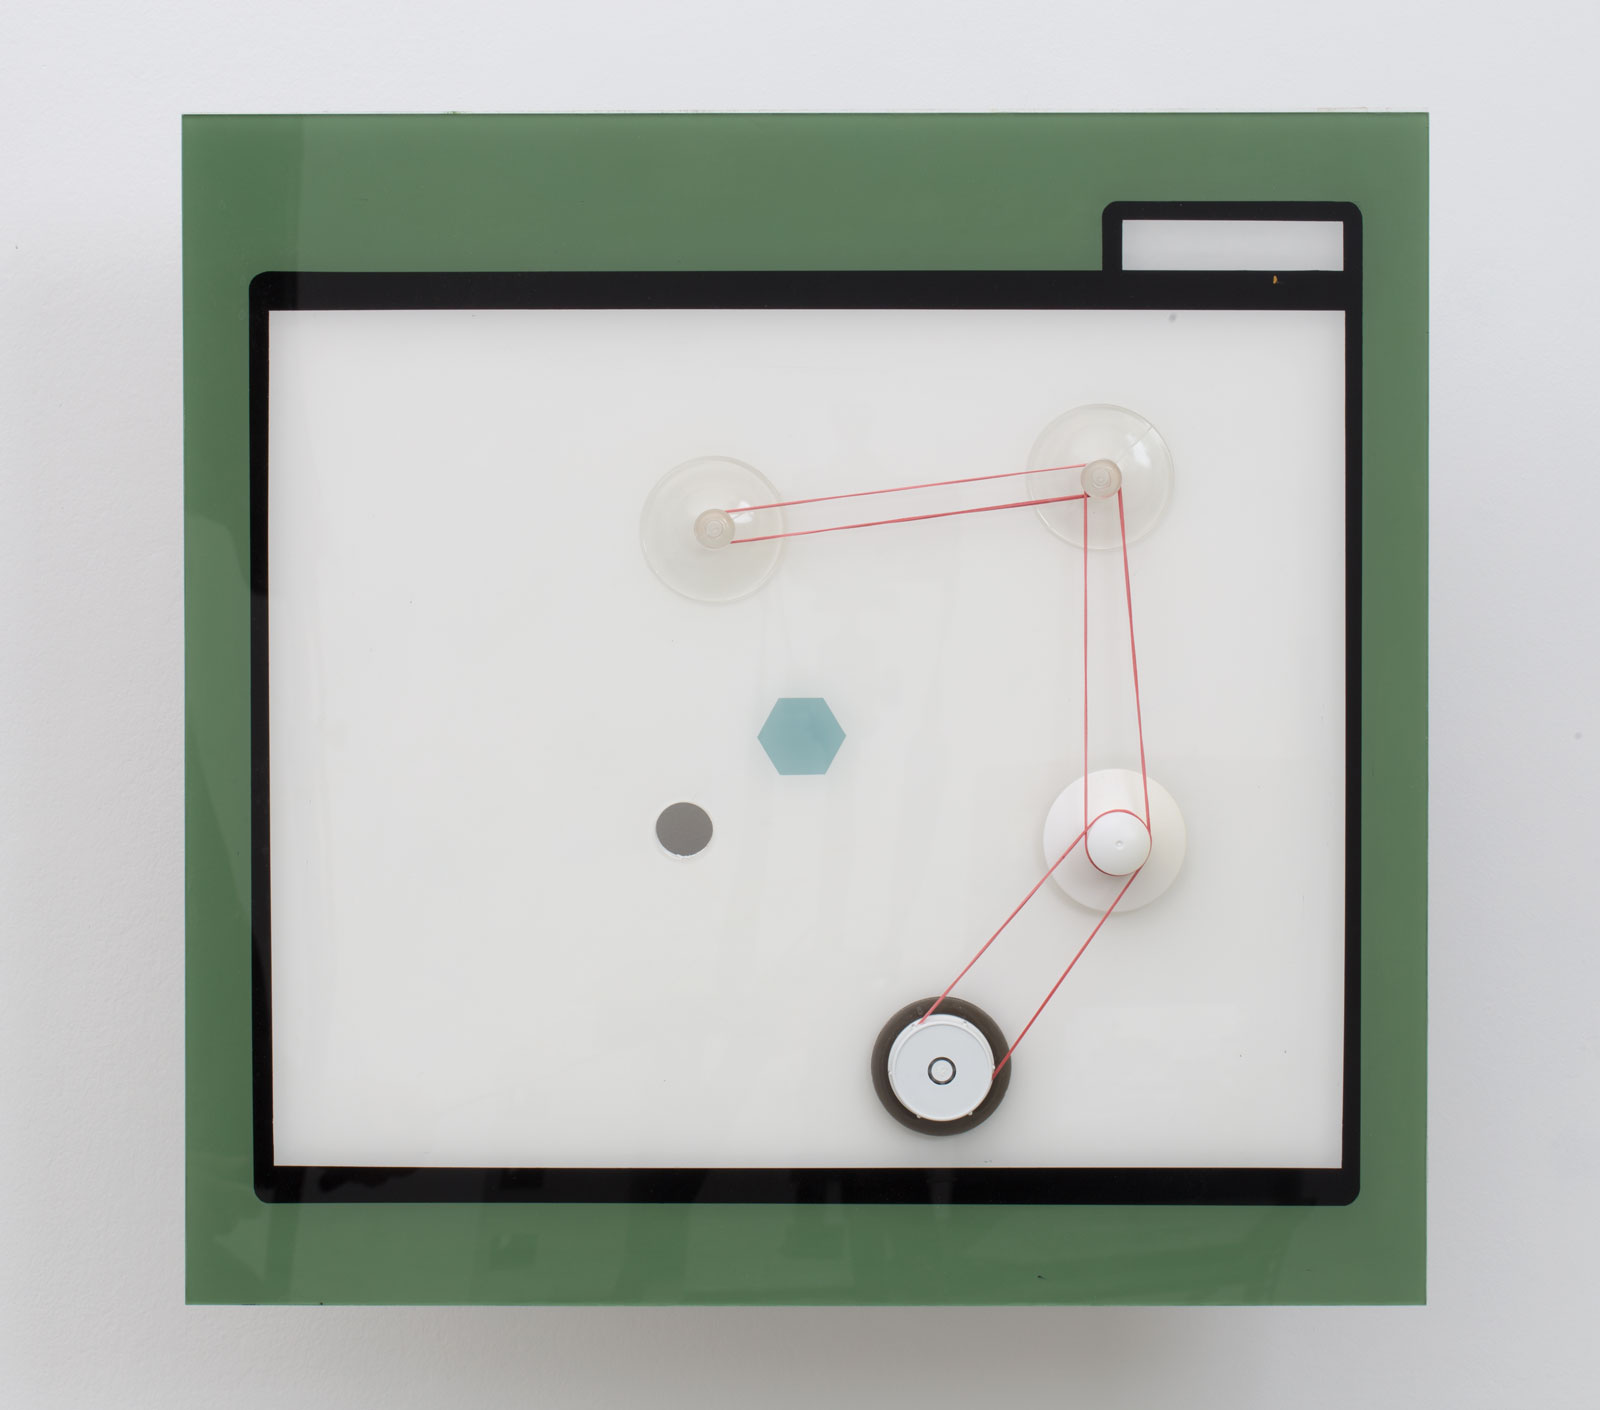 Ádám KOKESCH: Untitled, 2015, acrylic, plexi, rubber, plywood, 46 x 48 x 20 cm